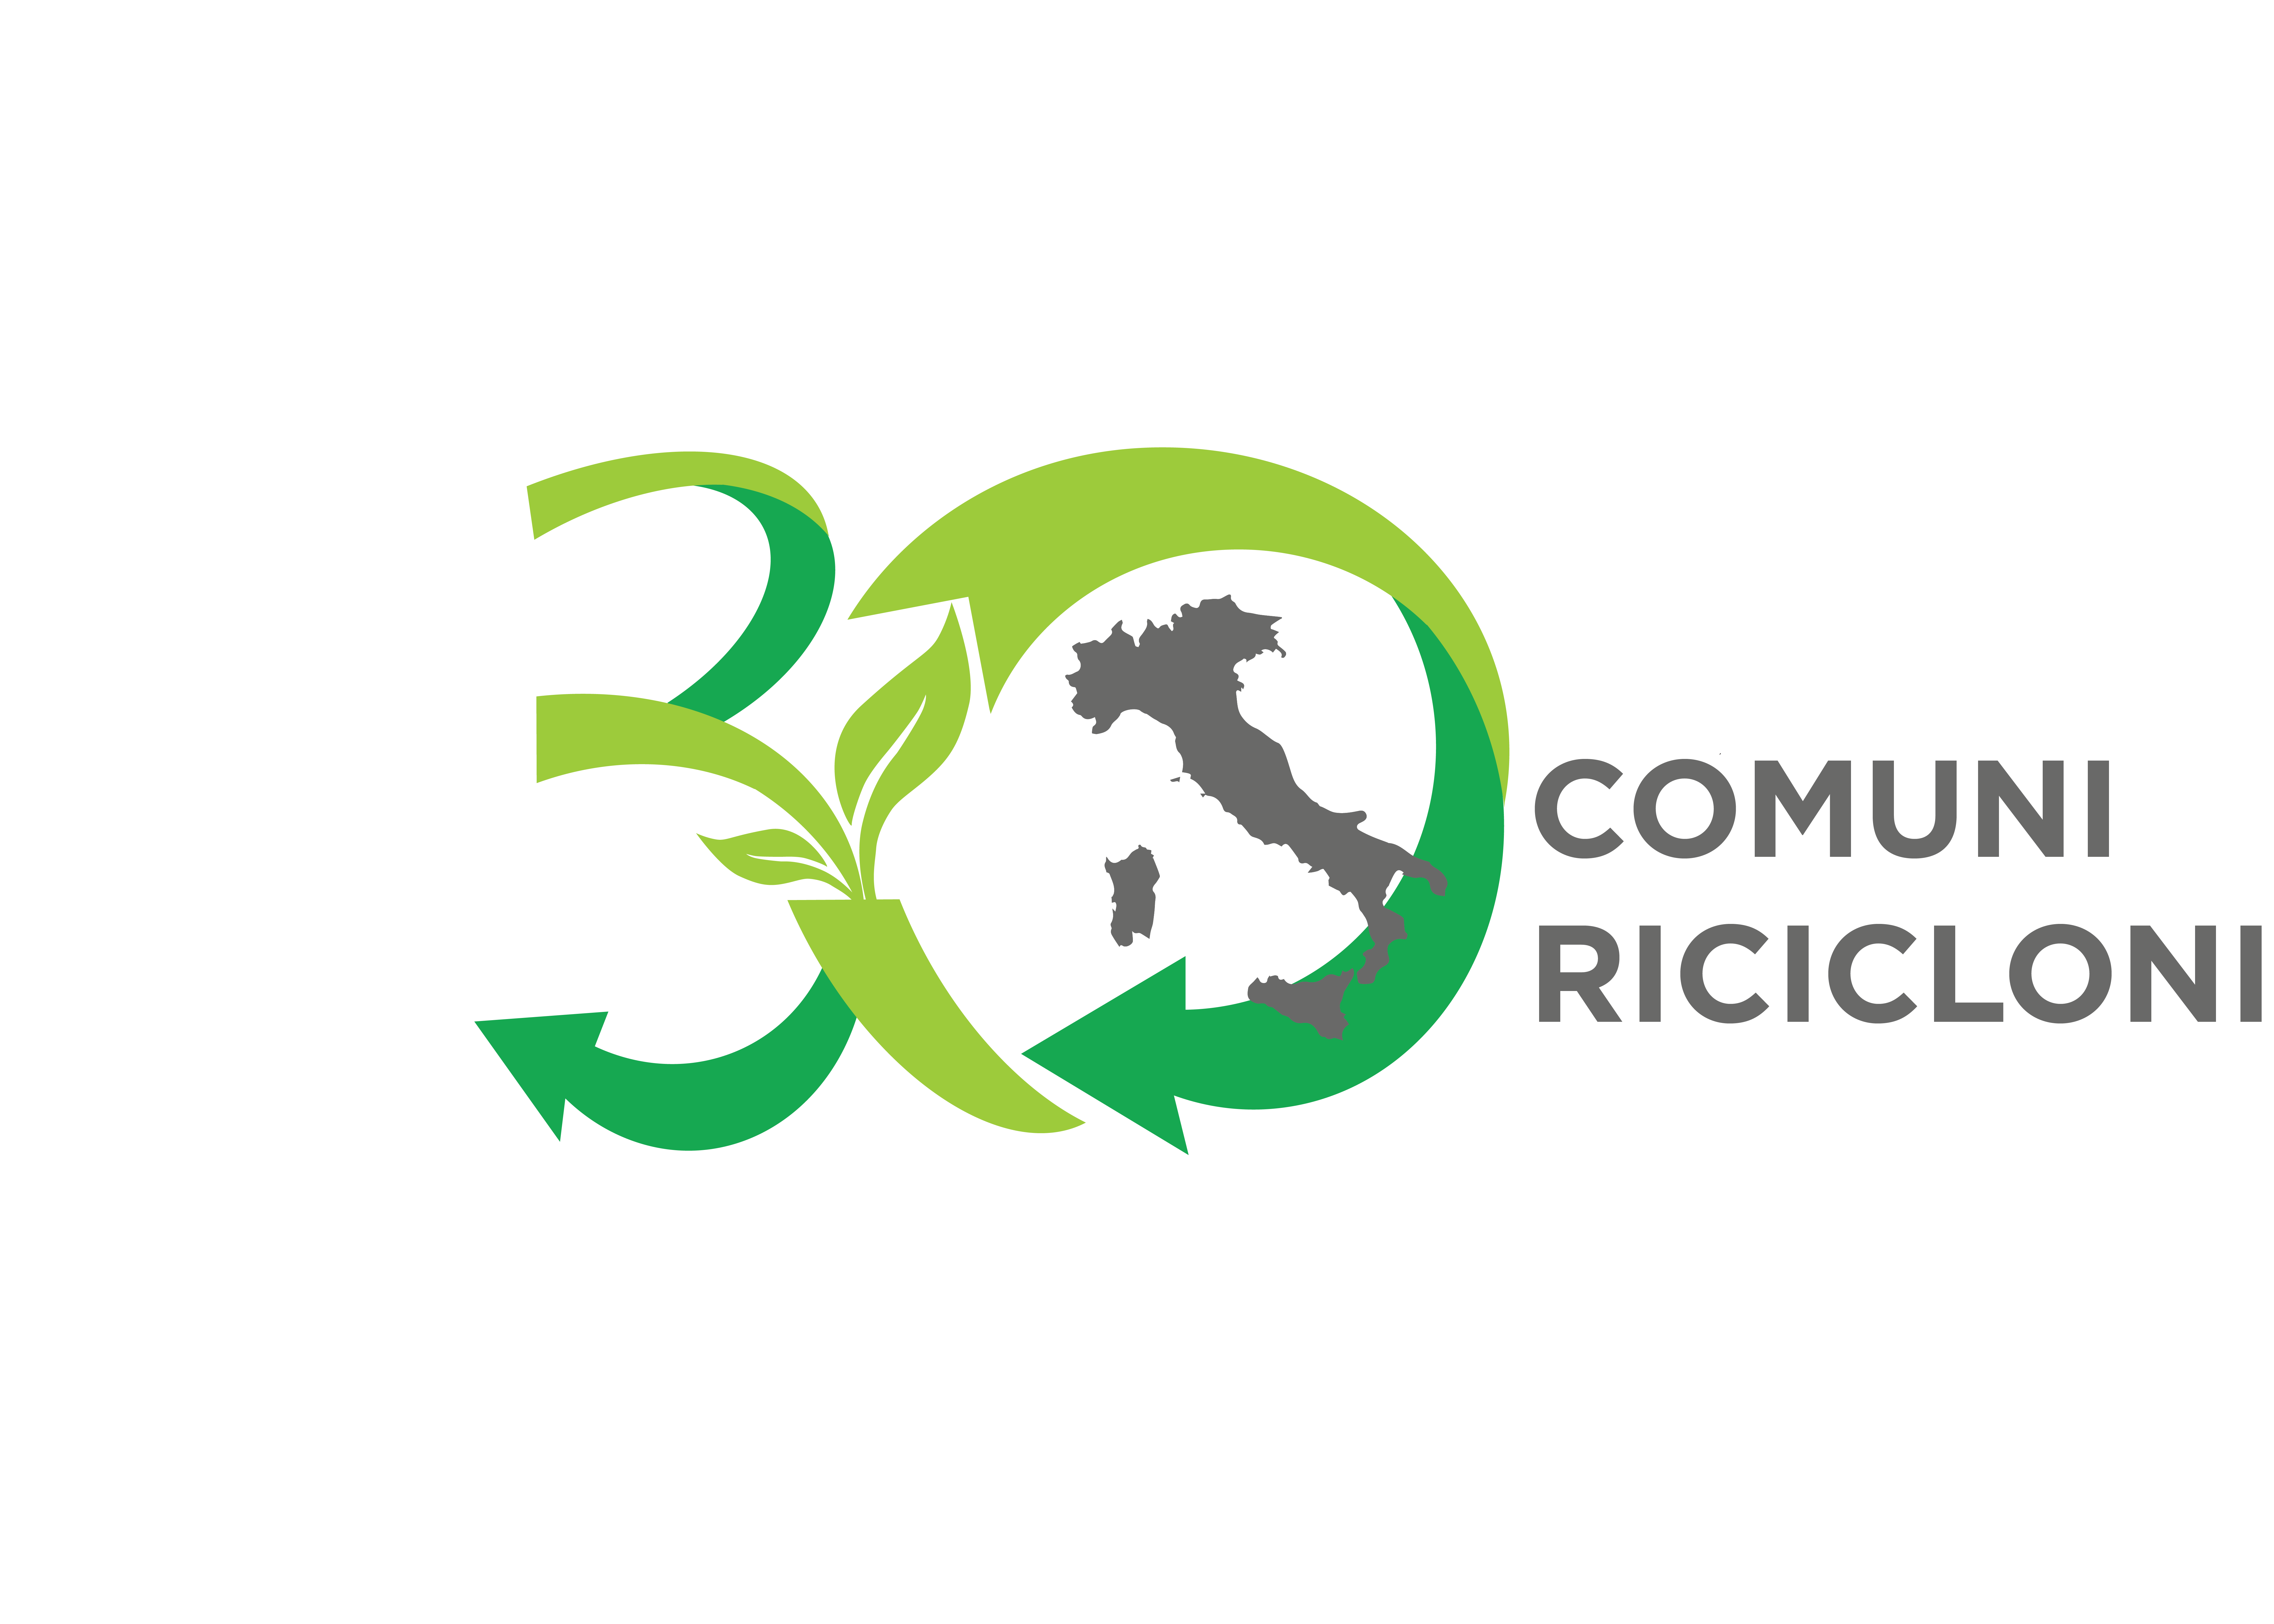 30-comuni-ricicloni264008994.png